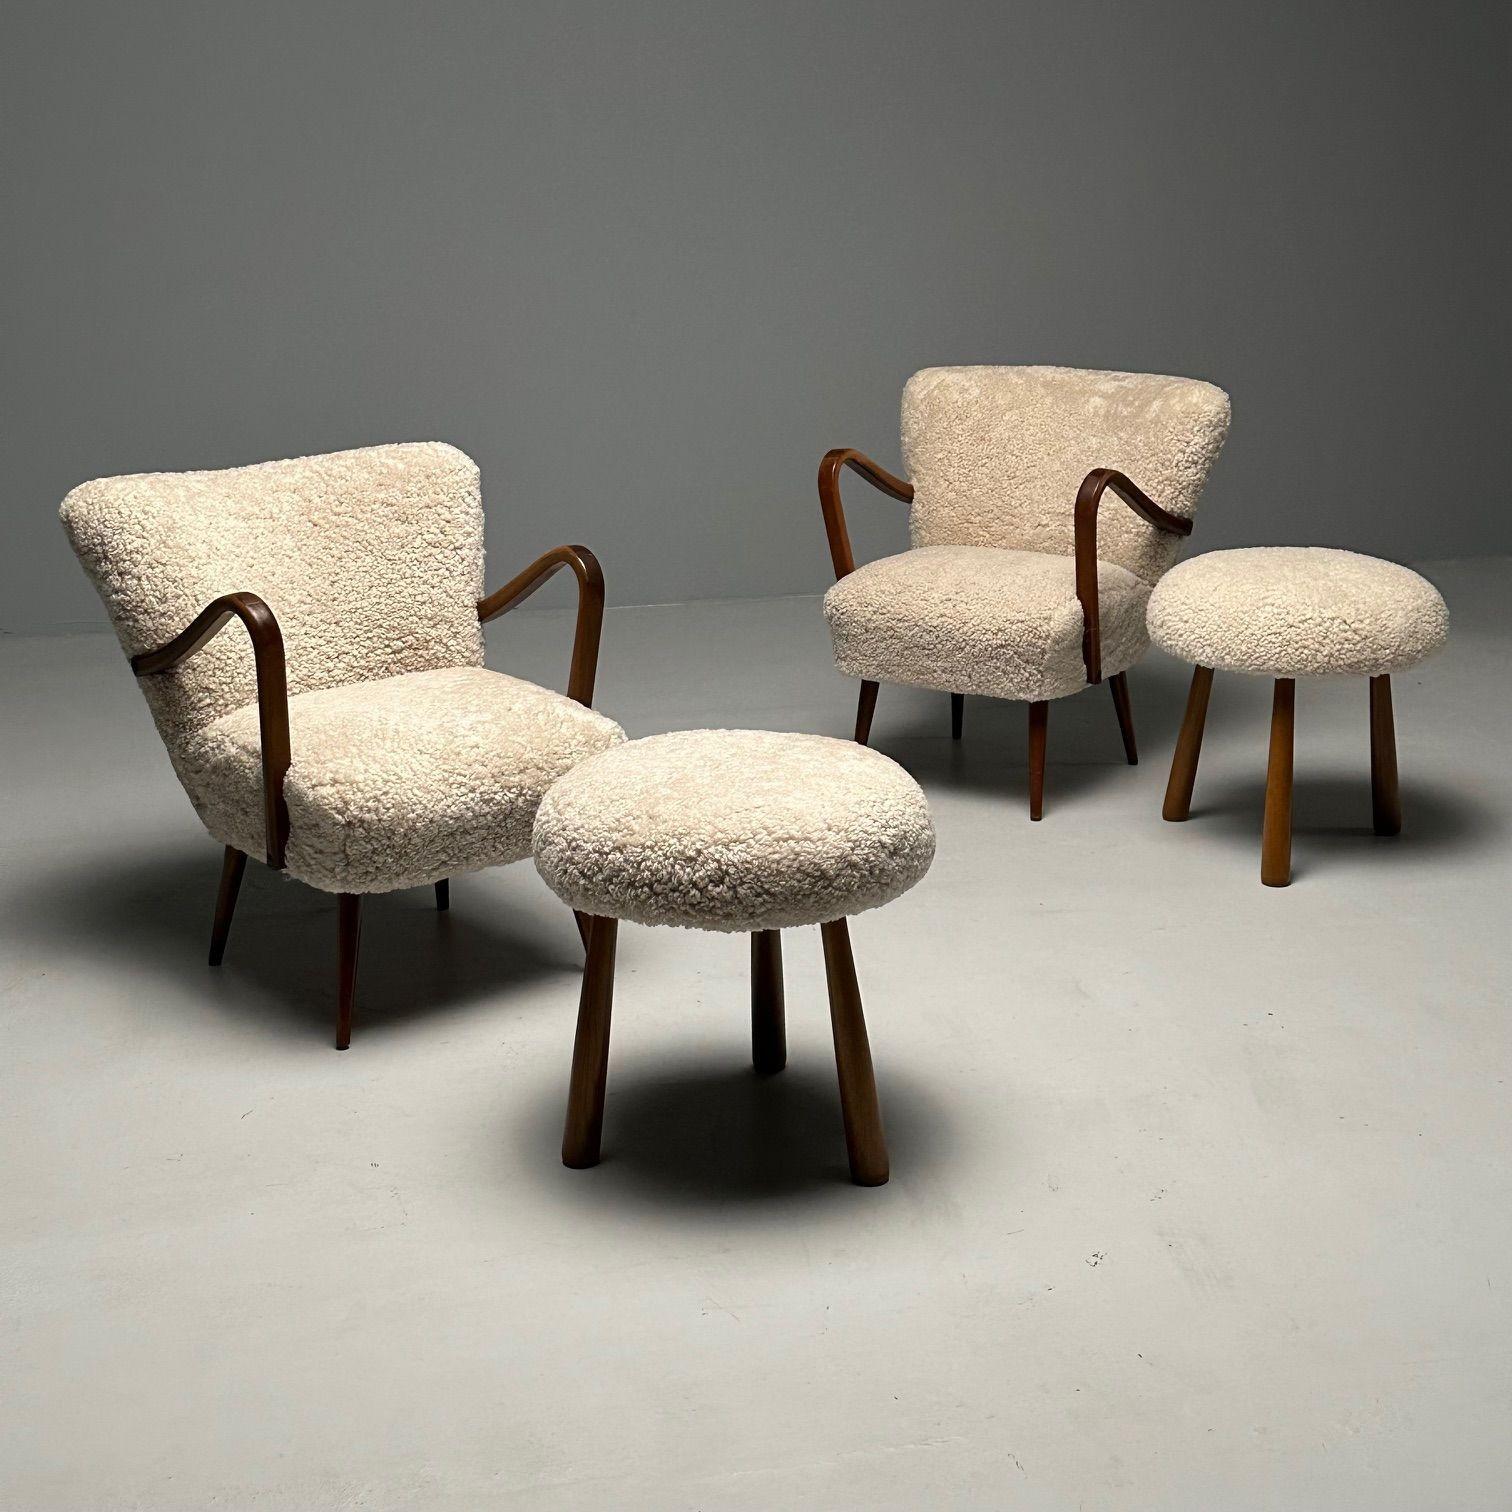 Swedish Mid-Century Modern, Shearling Lounge Chair, Sheepskin, Beech, 1950s For Sale 5